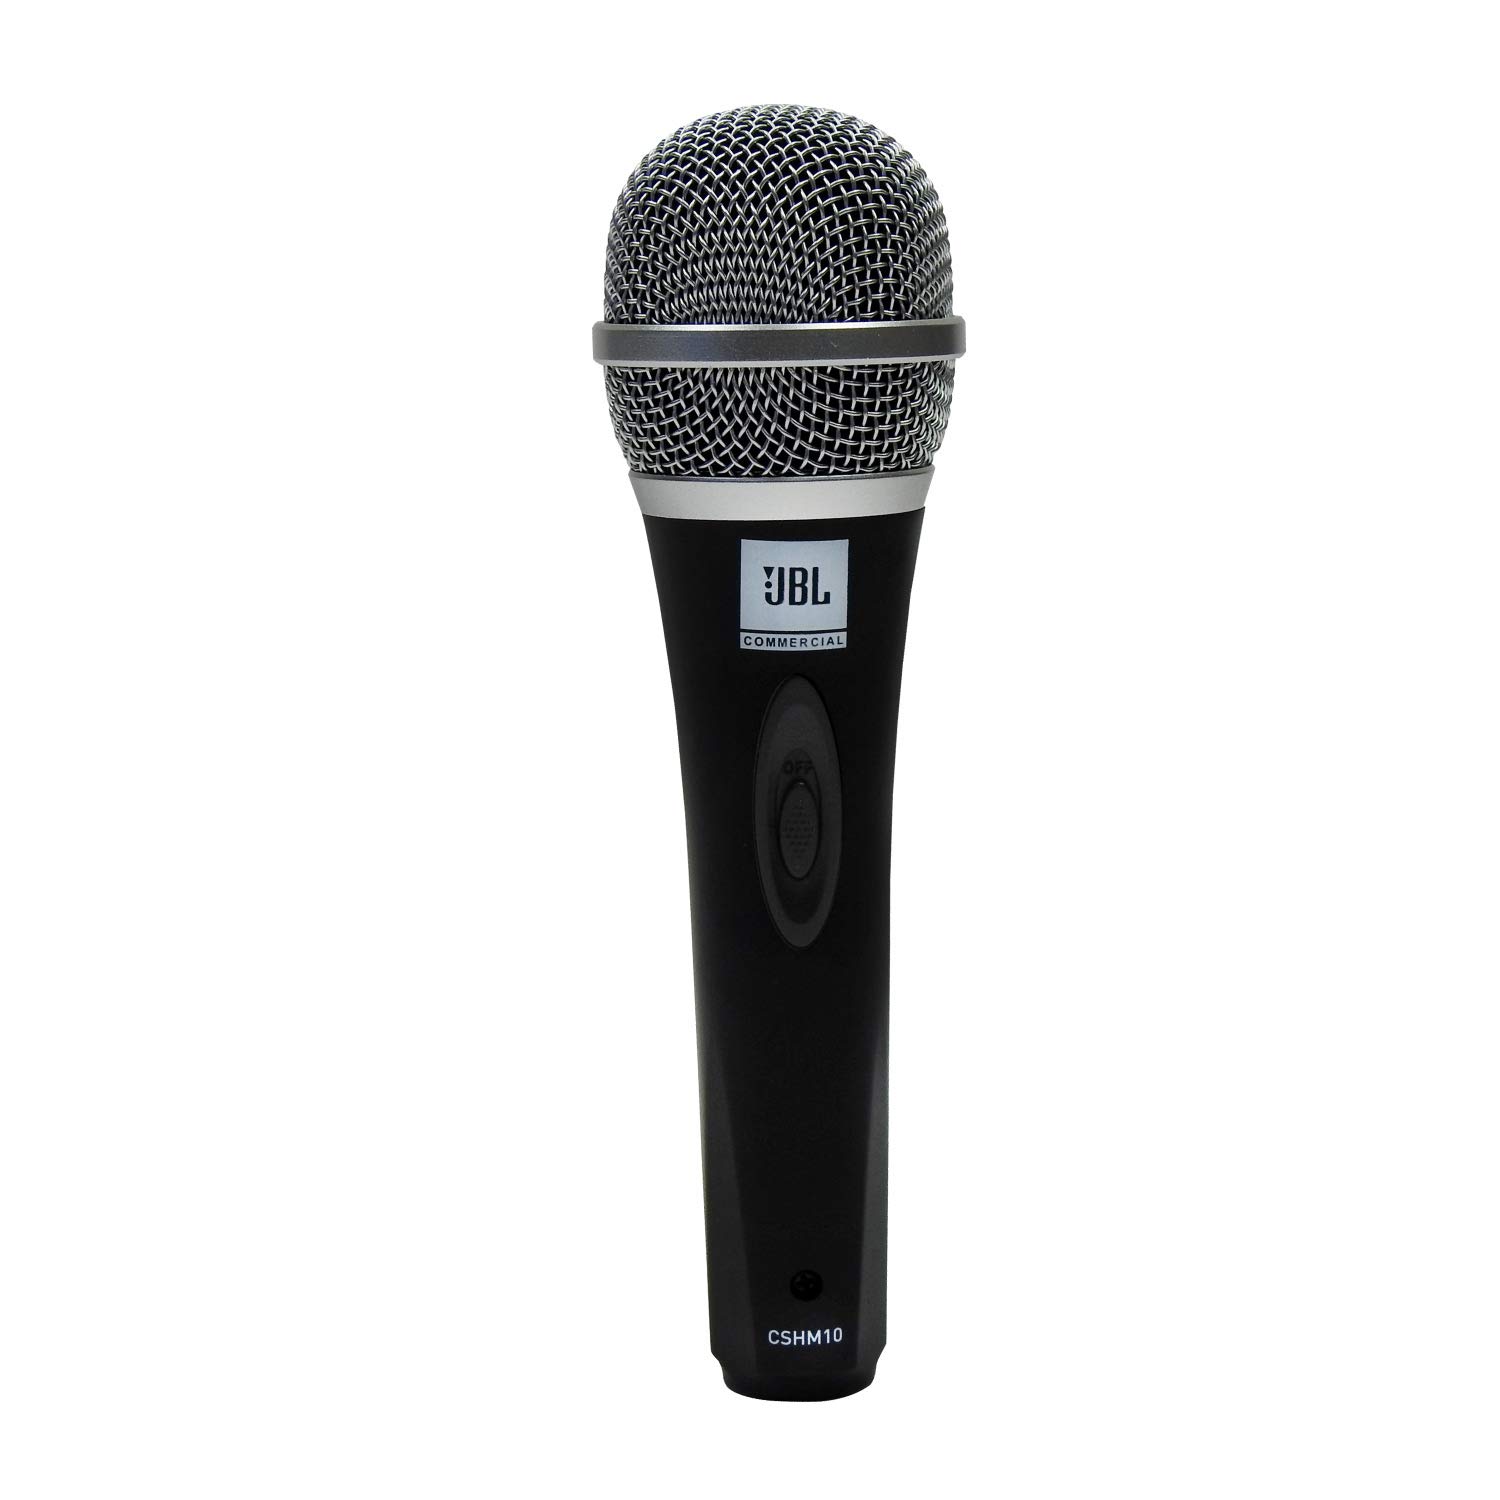 JBL Commercial CSHM10 Handheld dynamic microphone